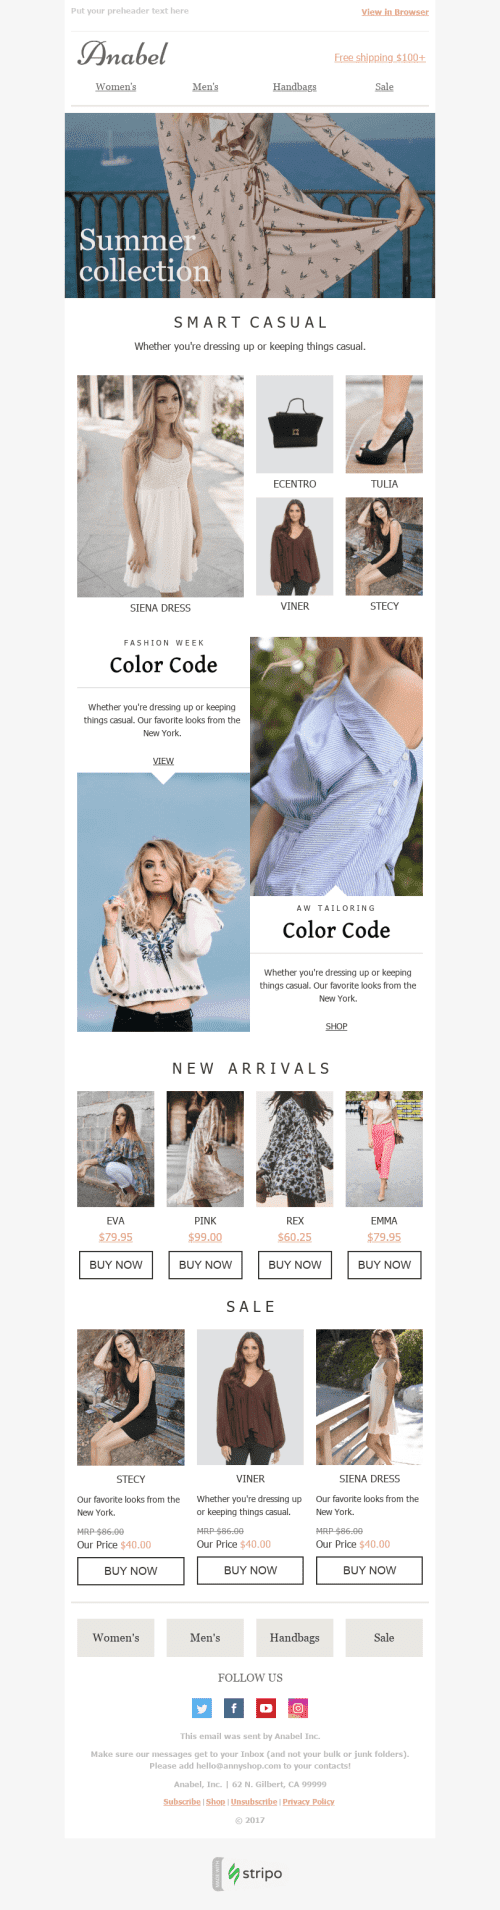 Промо шаблон письма "Яркие цвета" для индустрии "Мода" mobile view